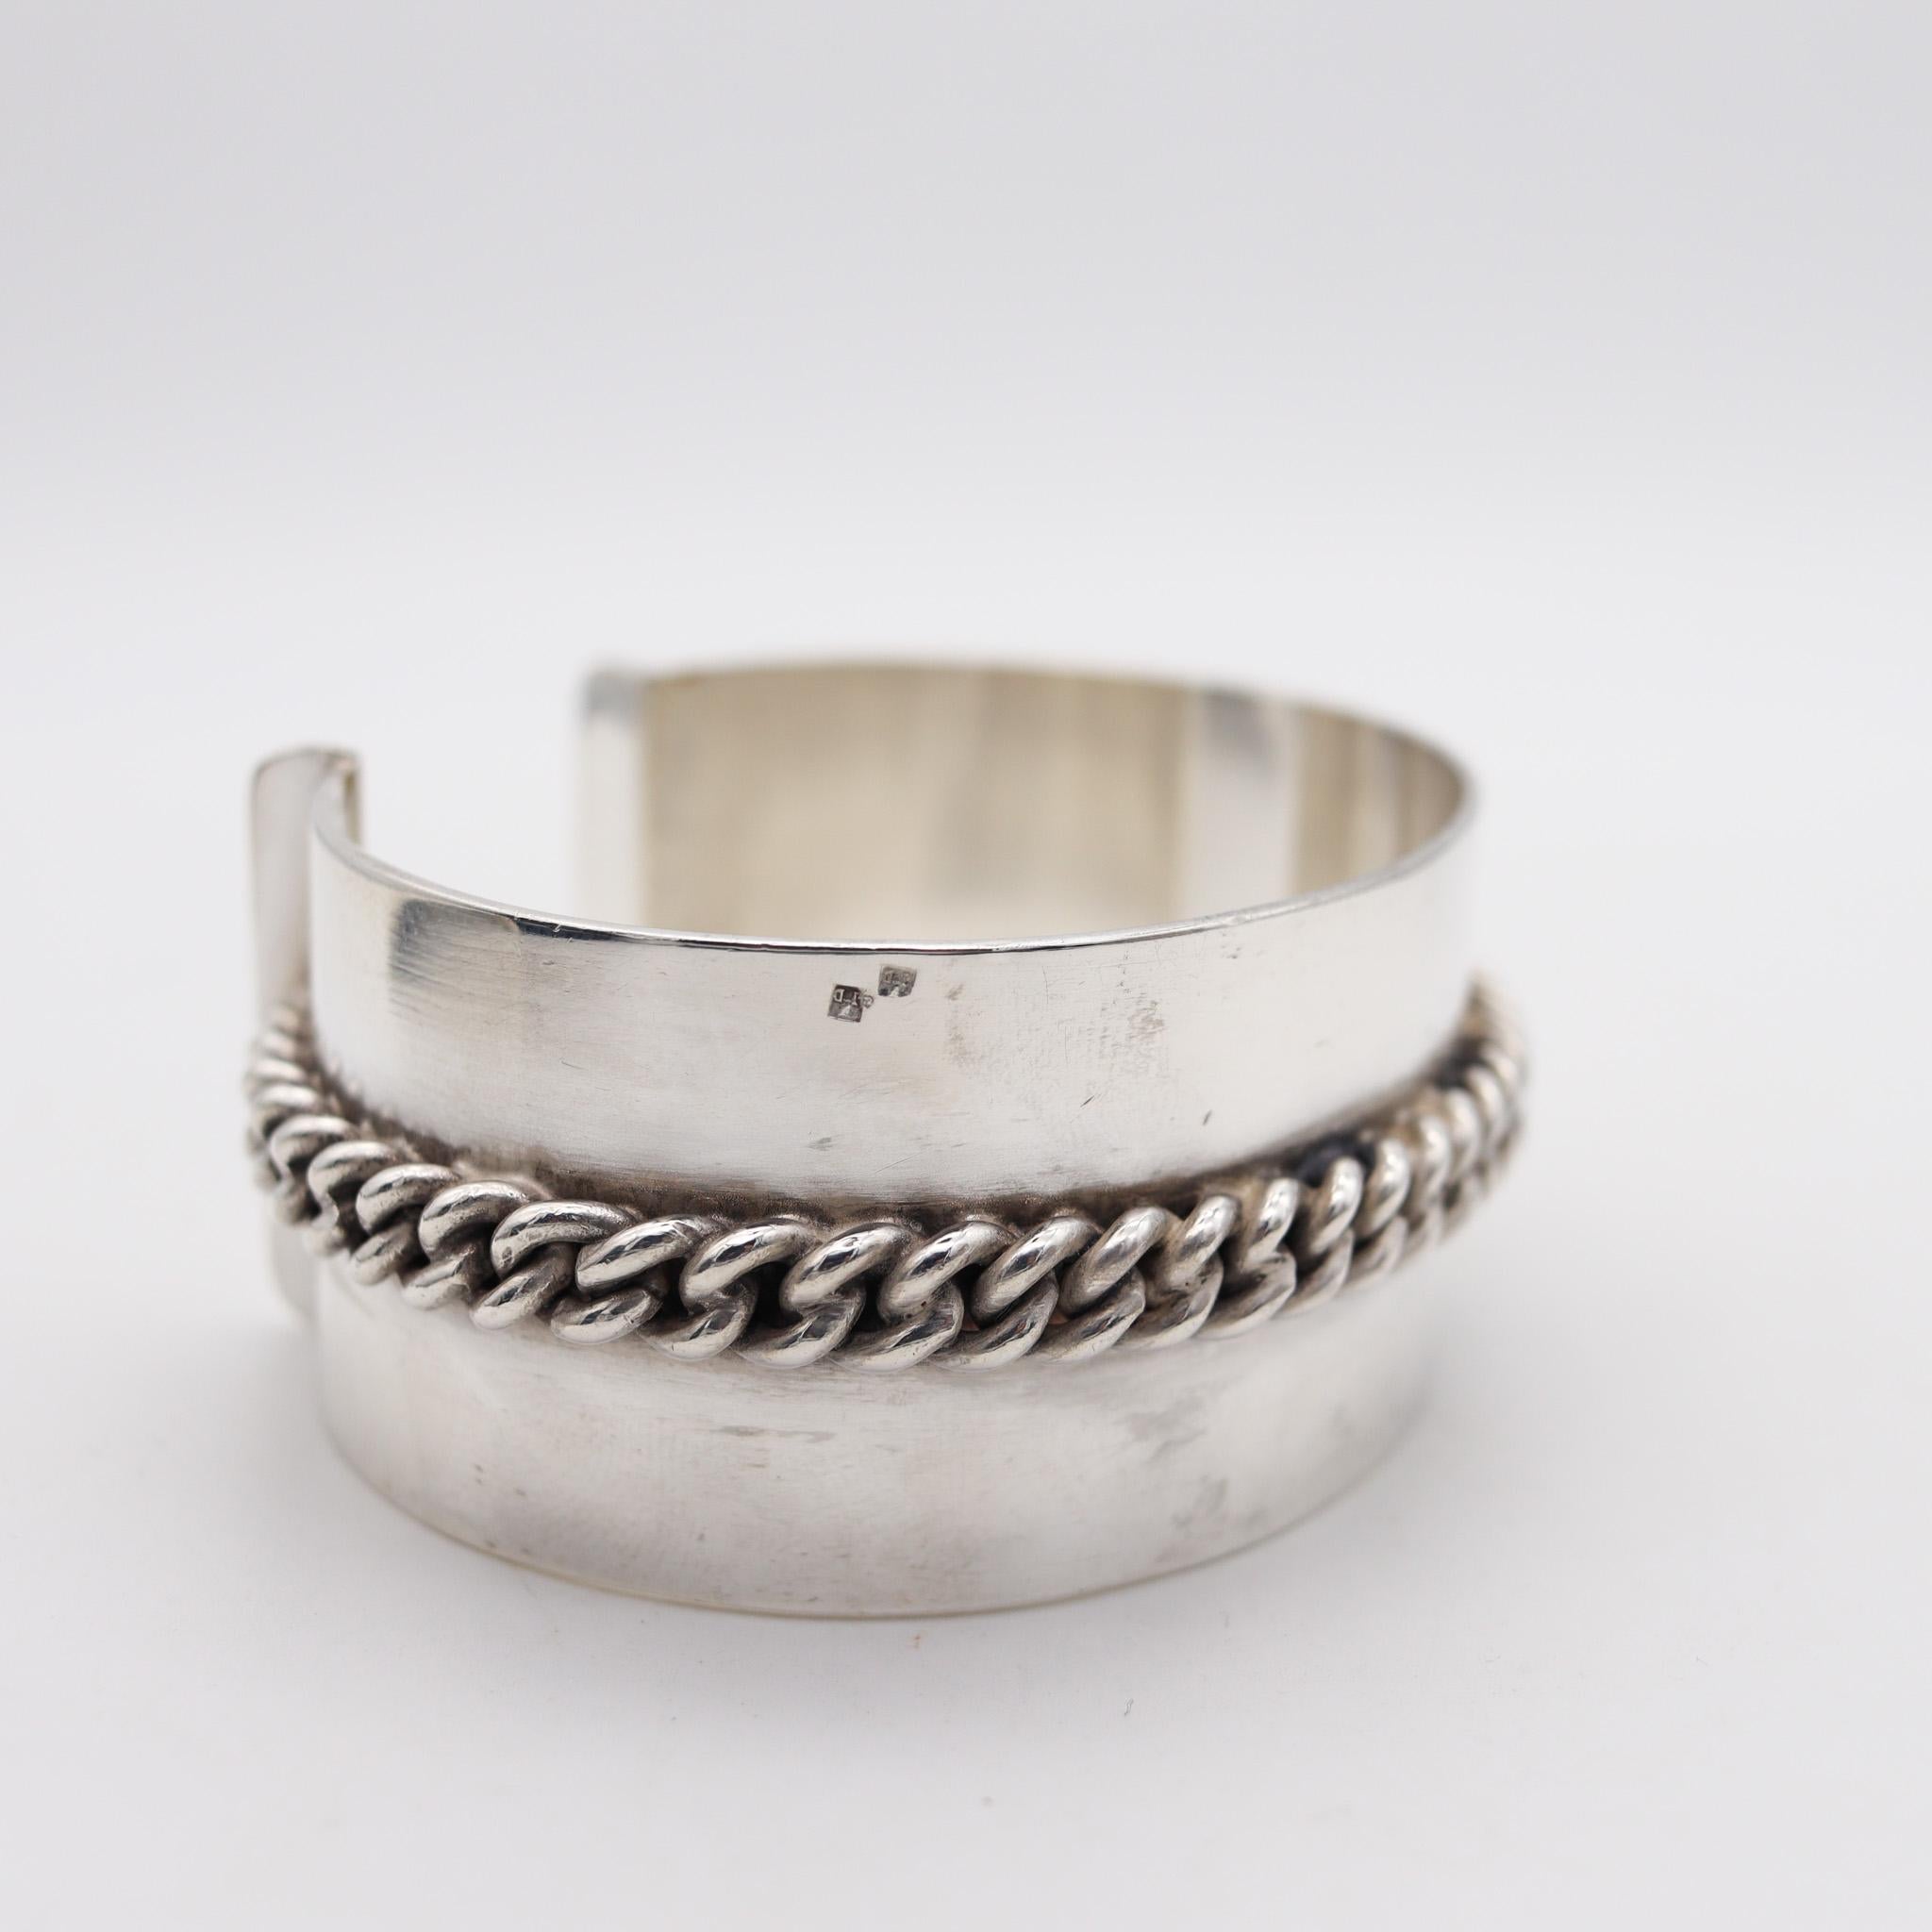 Jean Després 1960 Paris Artistic Cuff Bracelet In .800 Silver With Chained Links For Sale 1